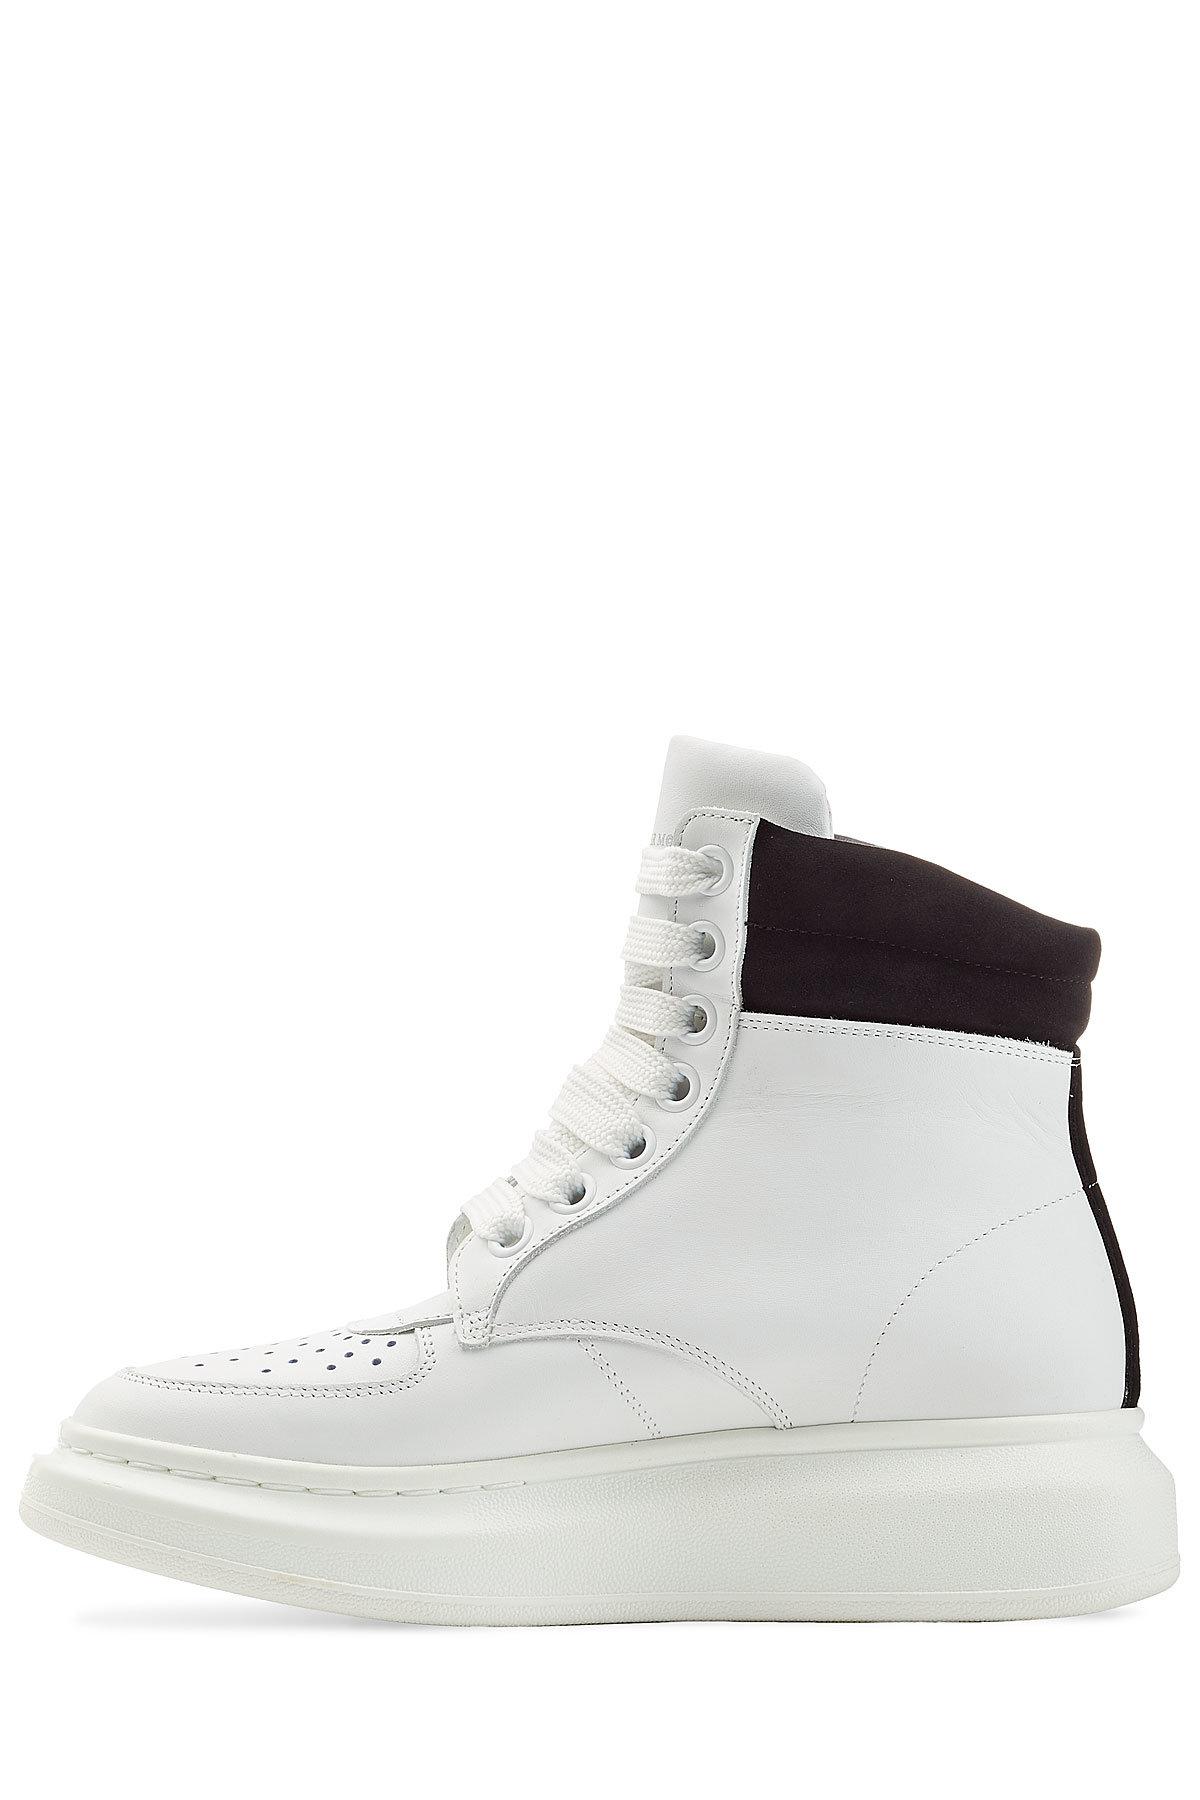 Alexander mcqueen High Top Leather Sneakers | Lyst